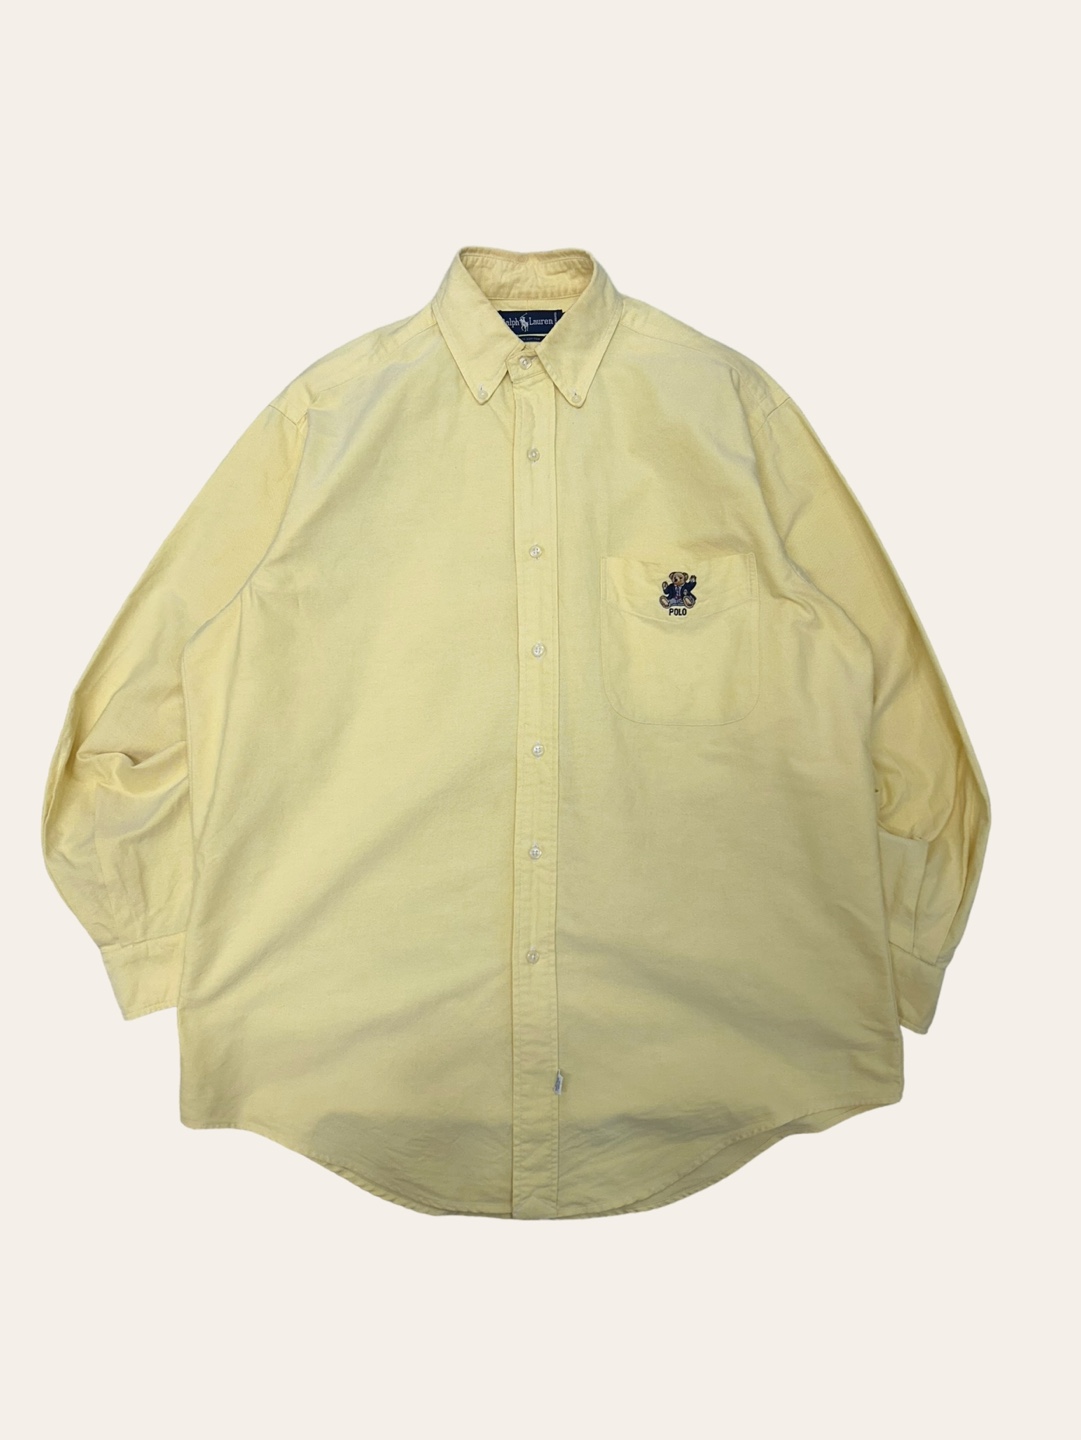 (From USA)Polo ralph lauren yellow bear logo oxford shirt S